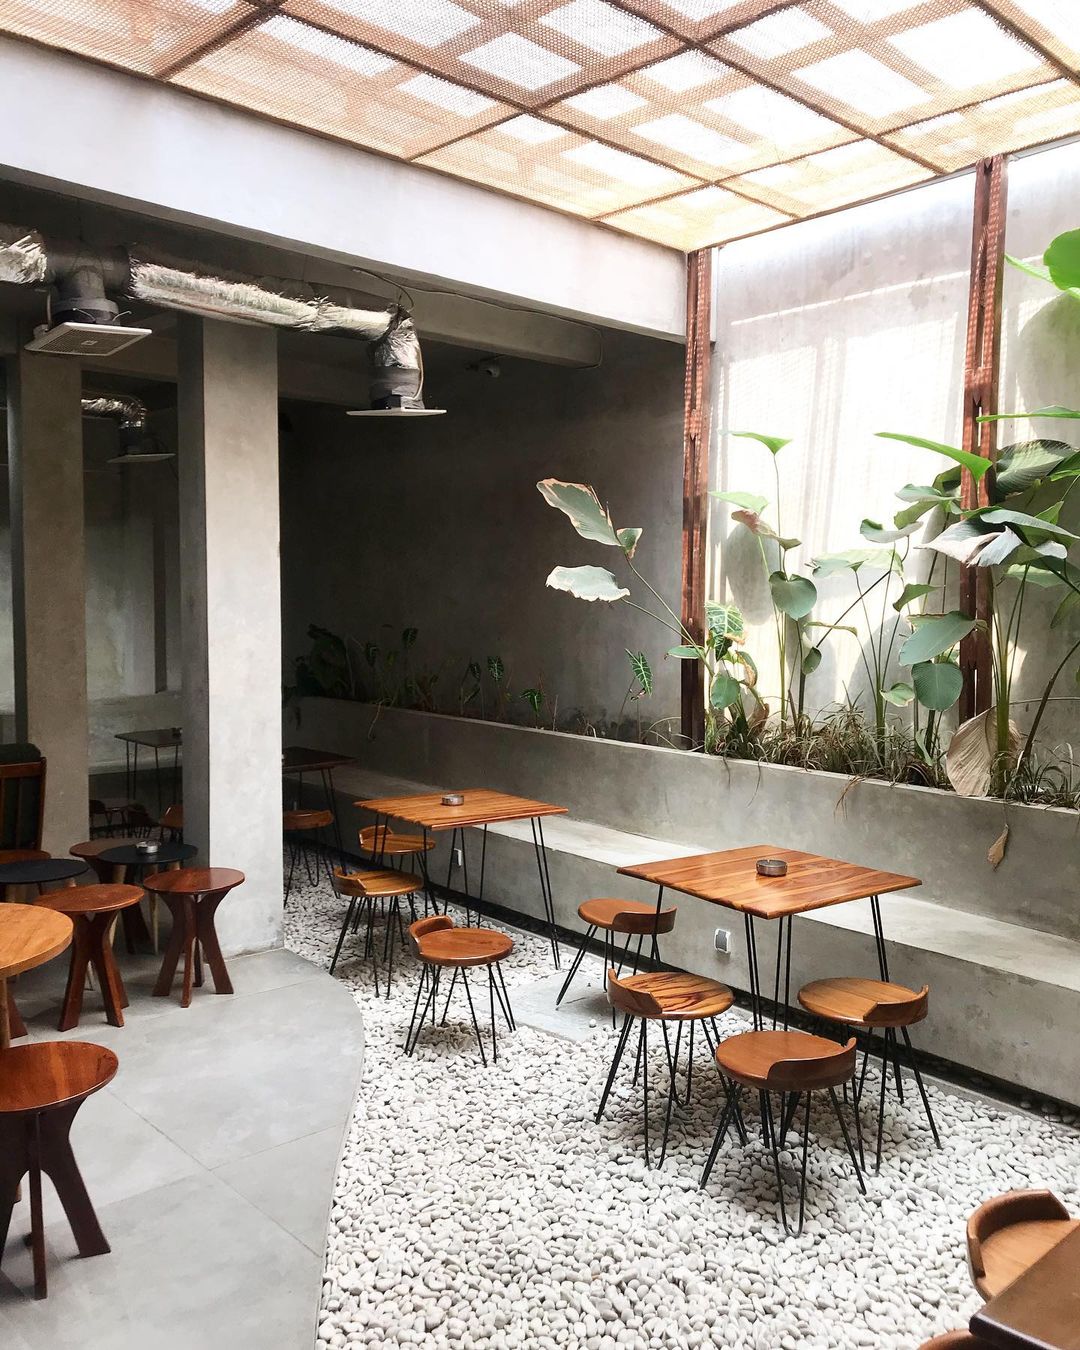 Kukira Coffee & Art Space di daerah Cipete Selatan / gambar IG @_kukira_